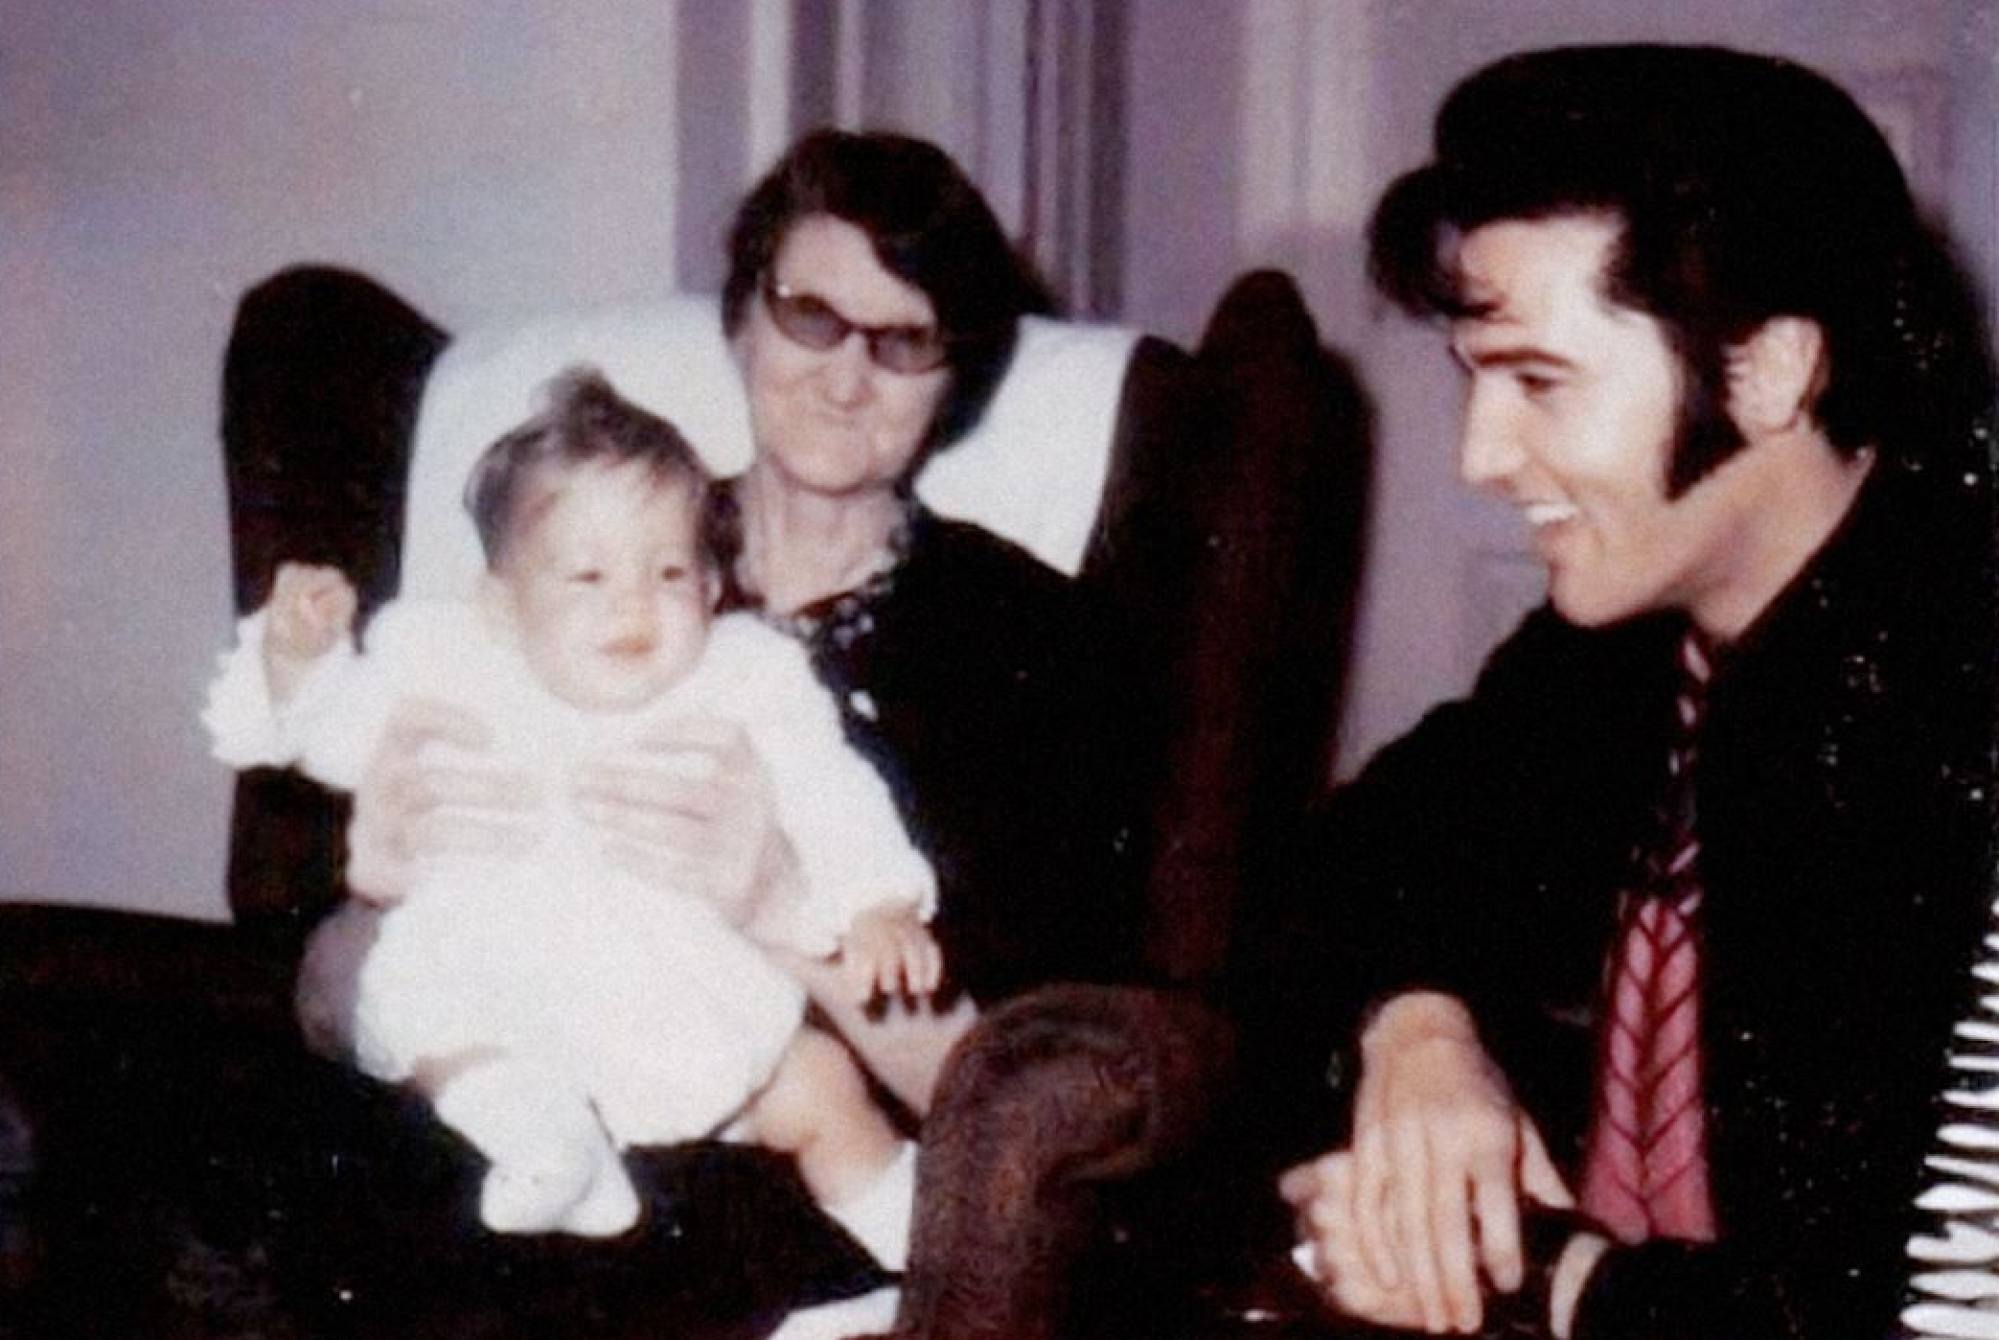 Elvis Presley at Graceland with baby Lisa Marie and his grandmother, Minnie Mae Presley. Photo: @presleyarchive/Twitter